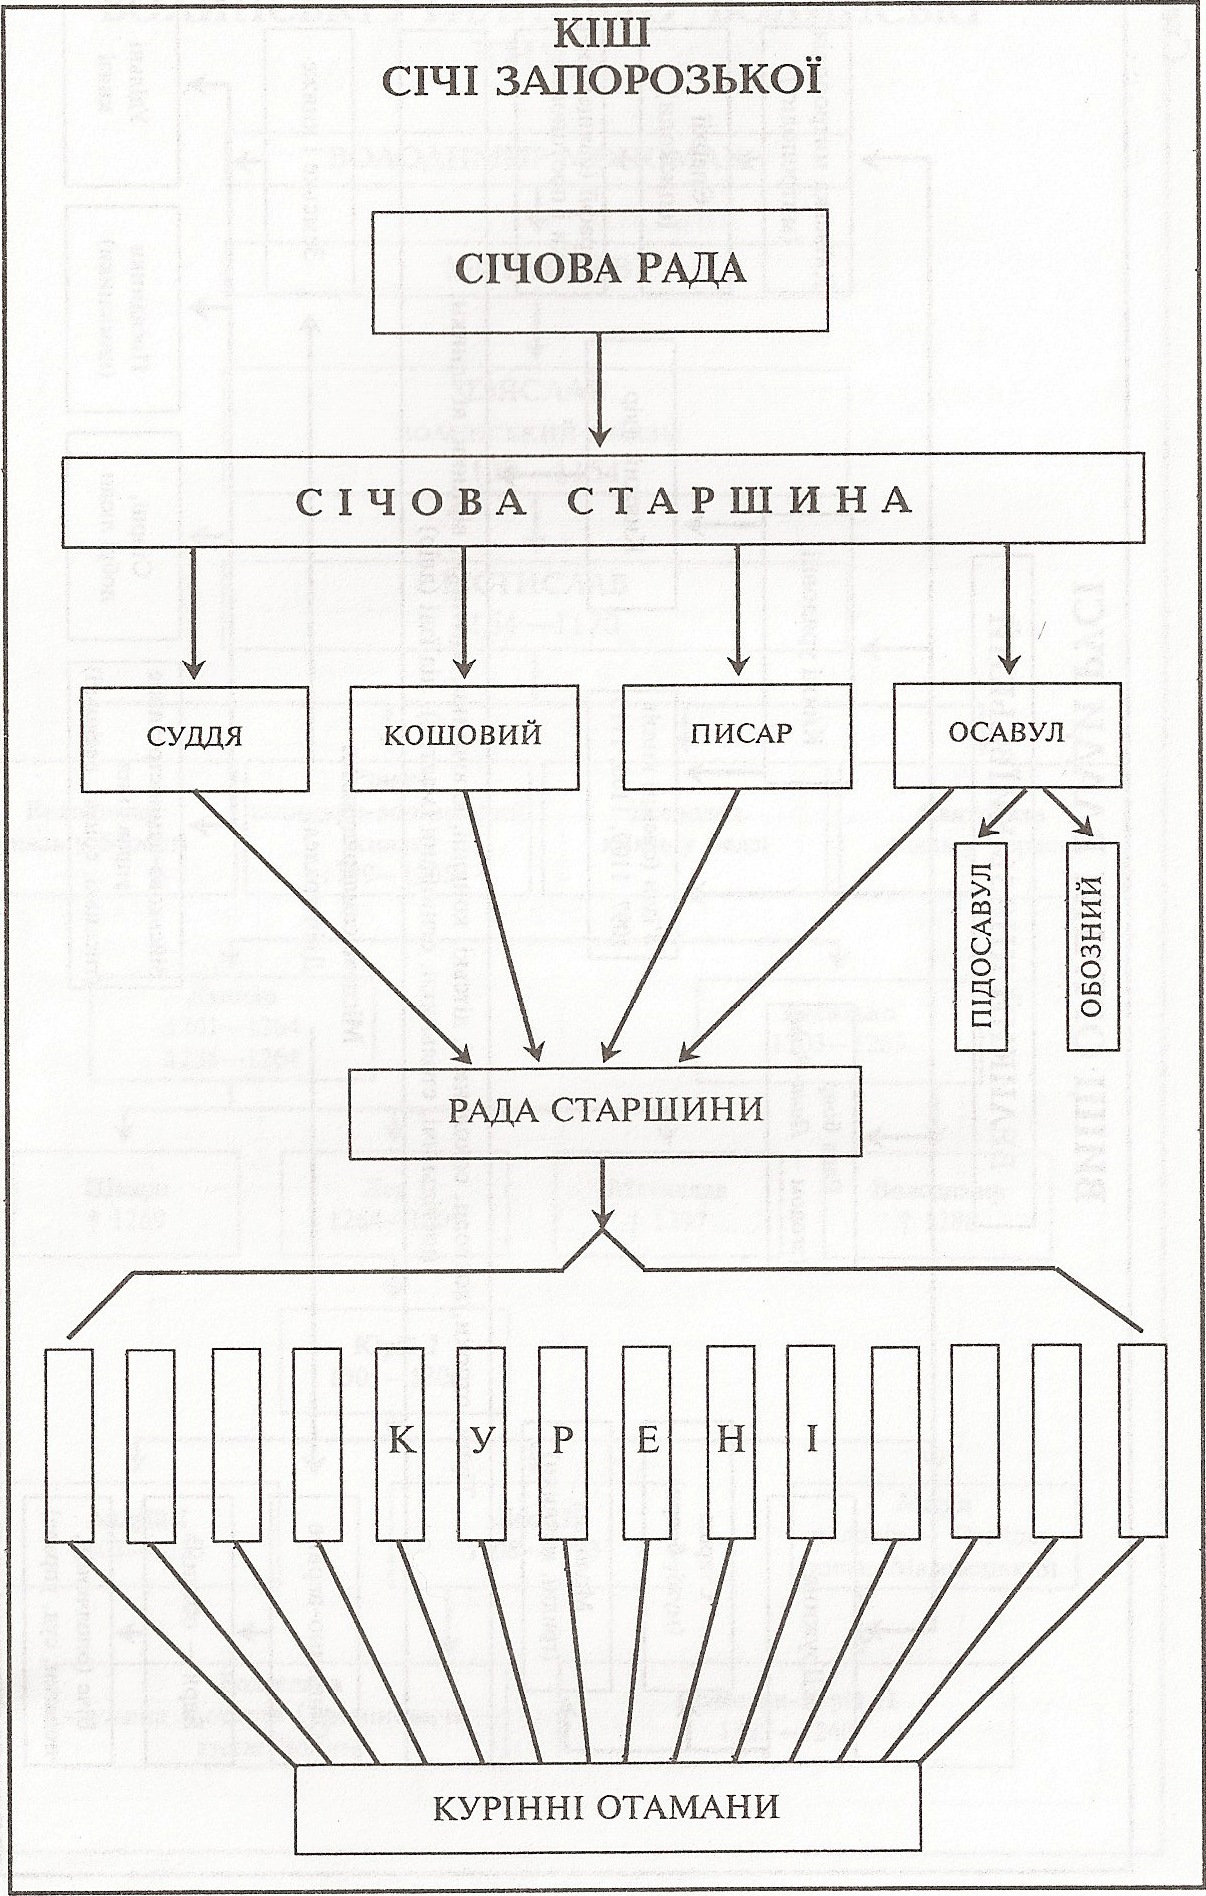 Таблица: Киш Сечи Запорожской